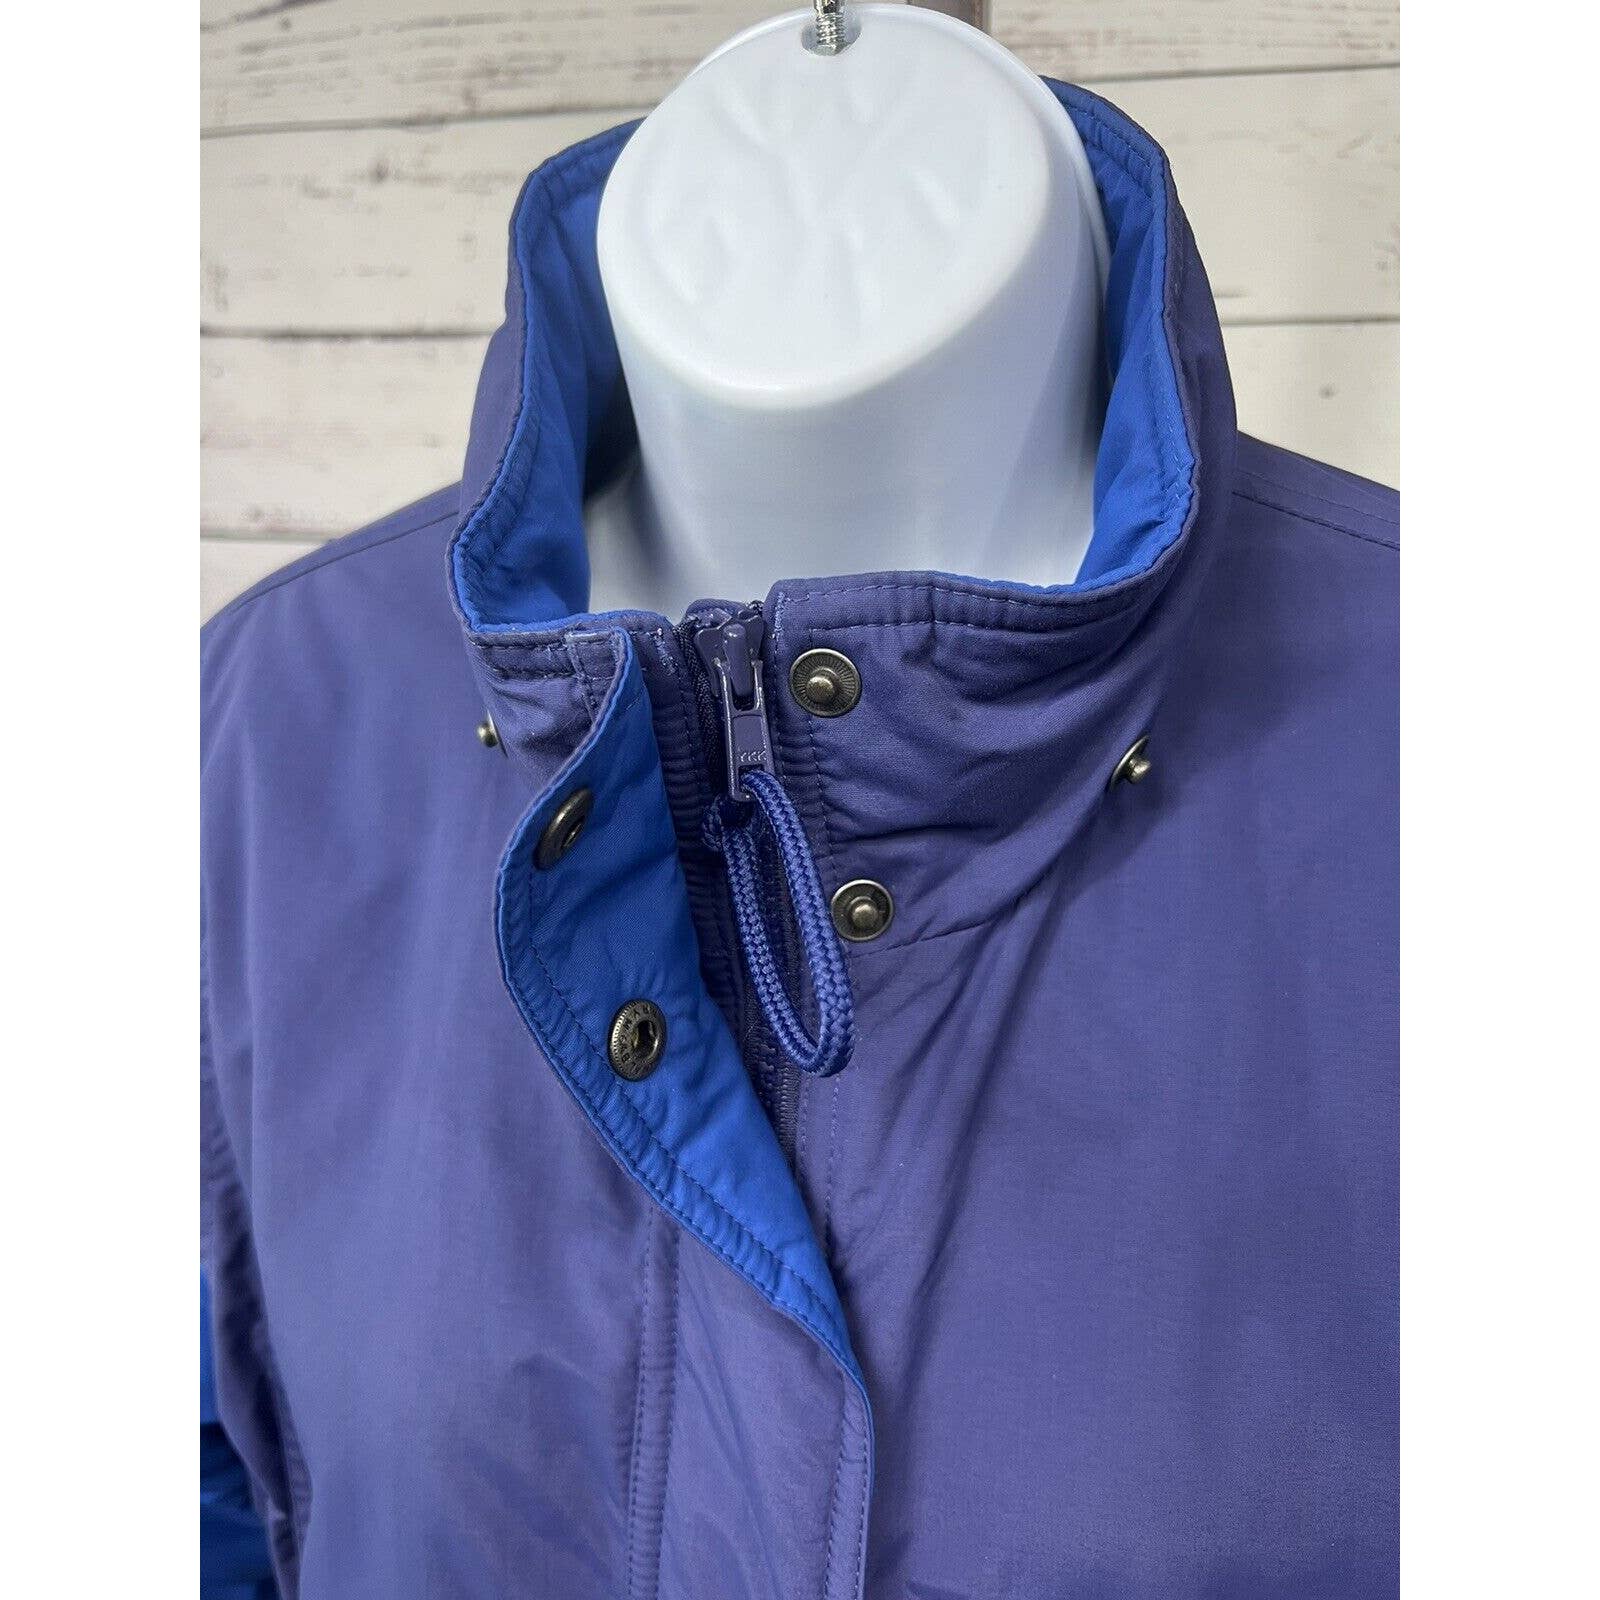 LL BEAN Winter Parka Jacket Women’s Small Purple Blue Thinsulate Lined Ski Coat